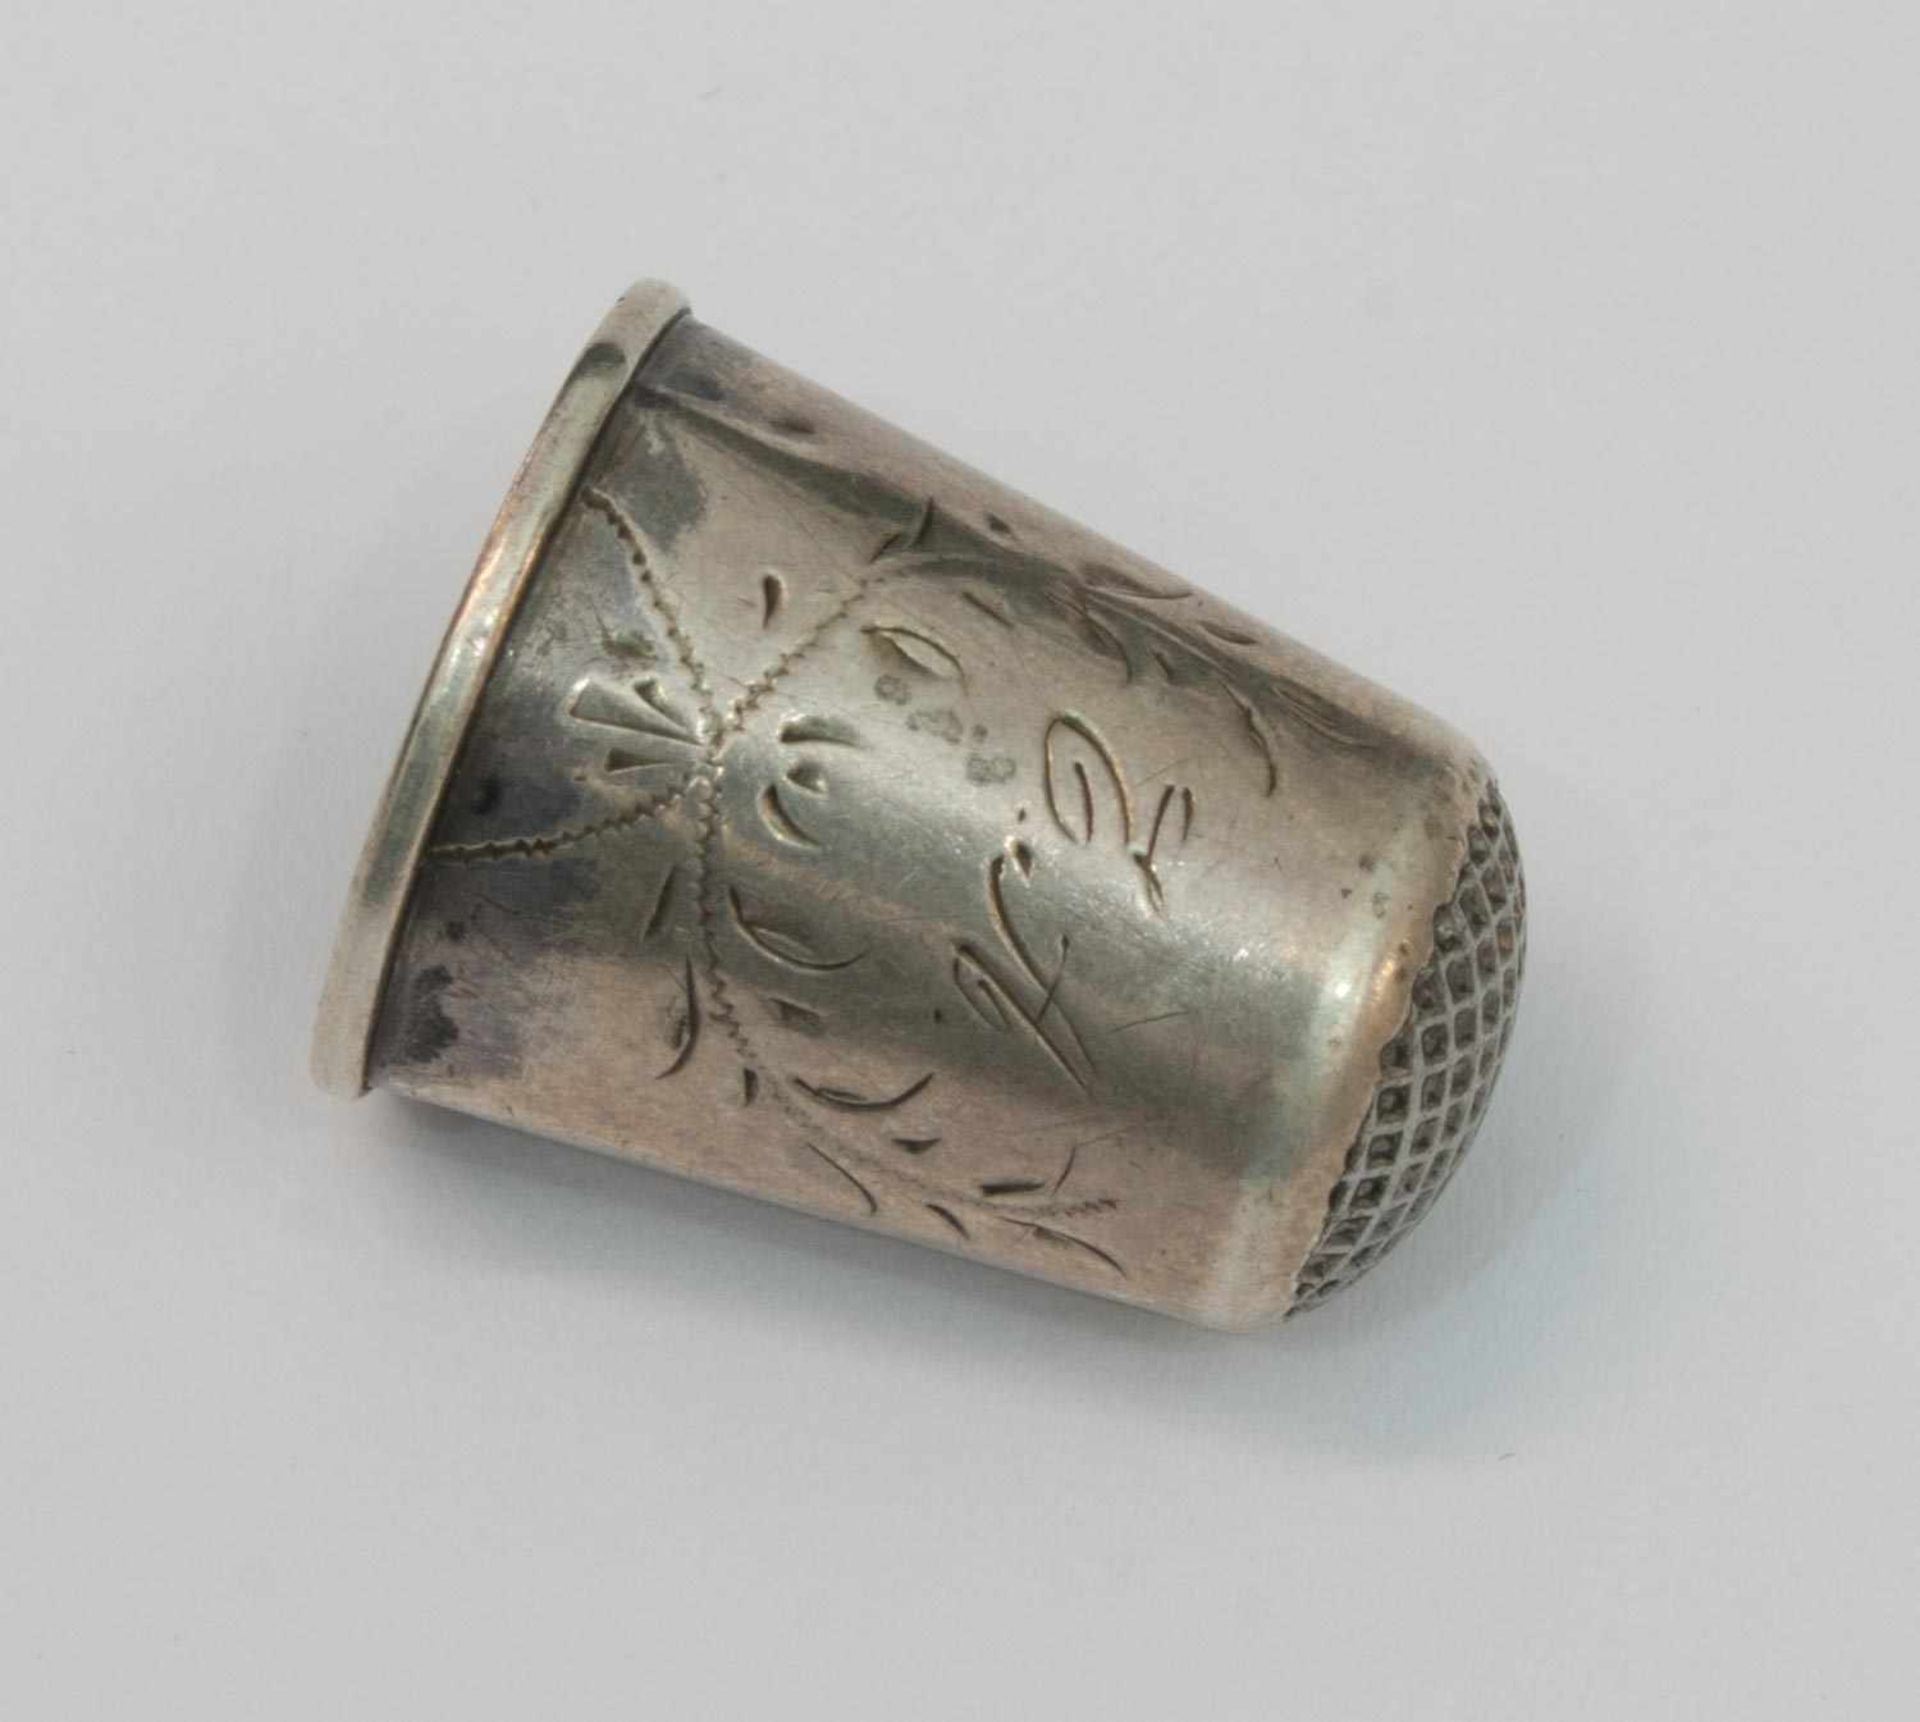 Fingerhut Schweden 1907, 830er Silber, floraler ziselierter Dekor, H. 2,2 cm